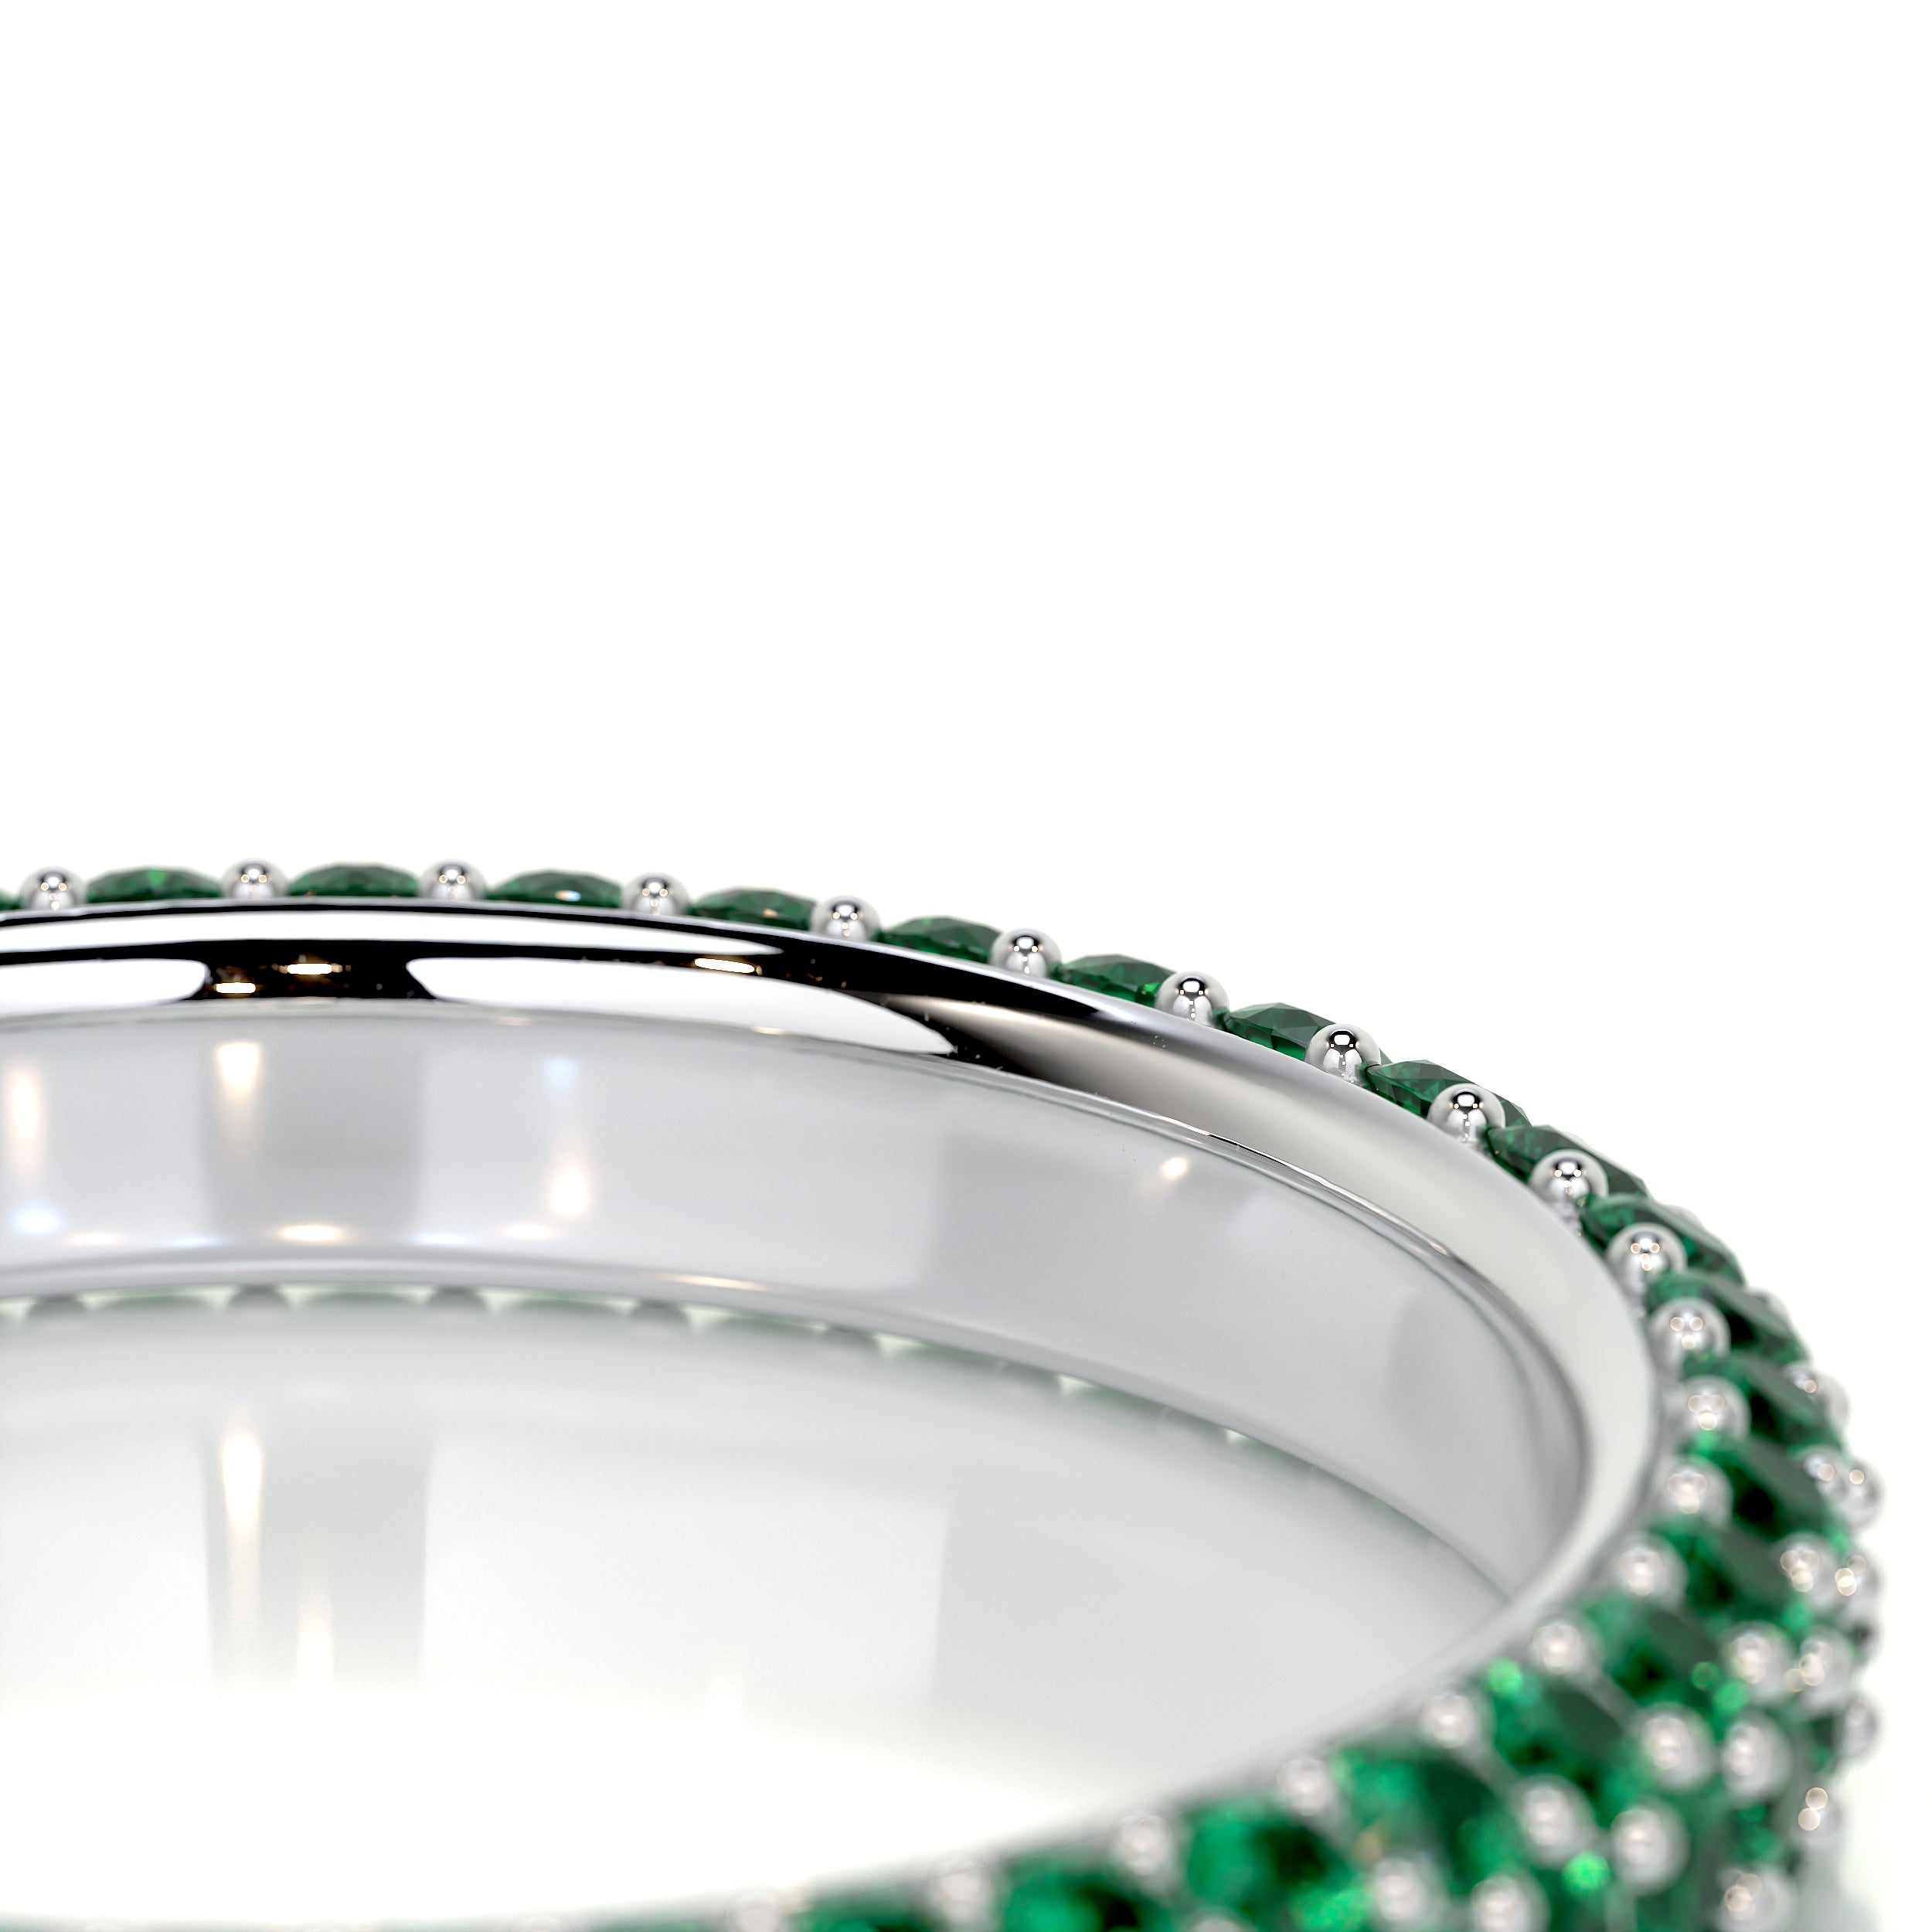 Emma Green Gemstone Wedding Ring   (1.25 Carat) - Platinum